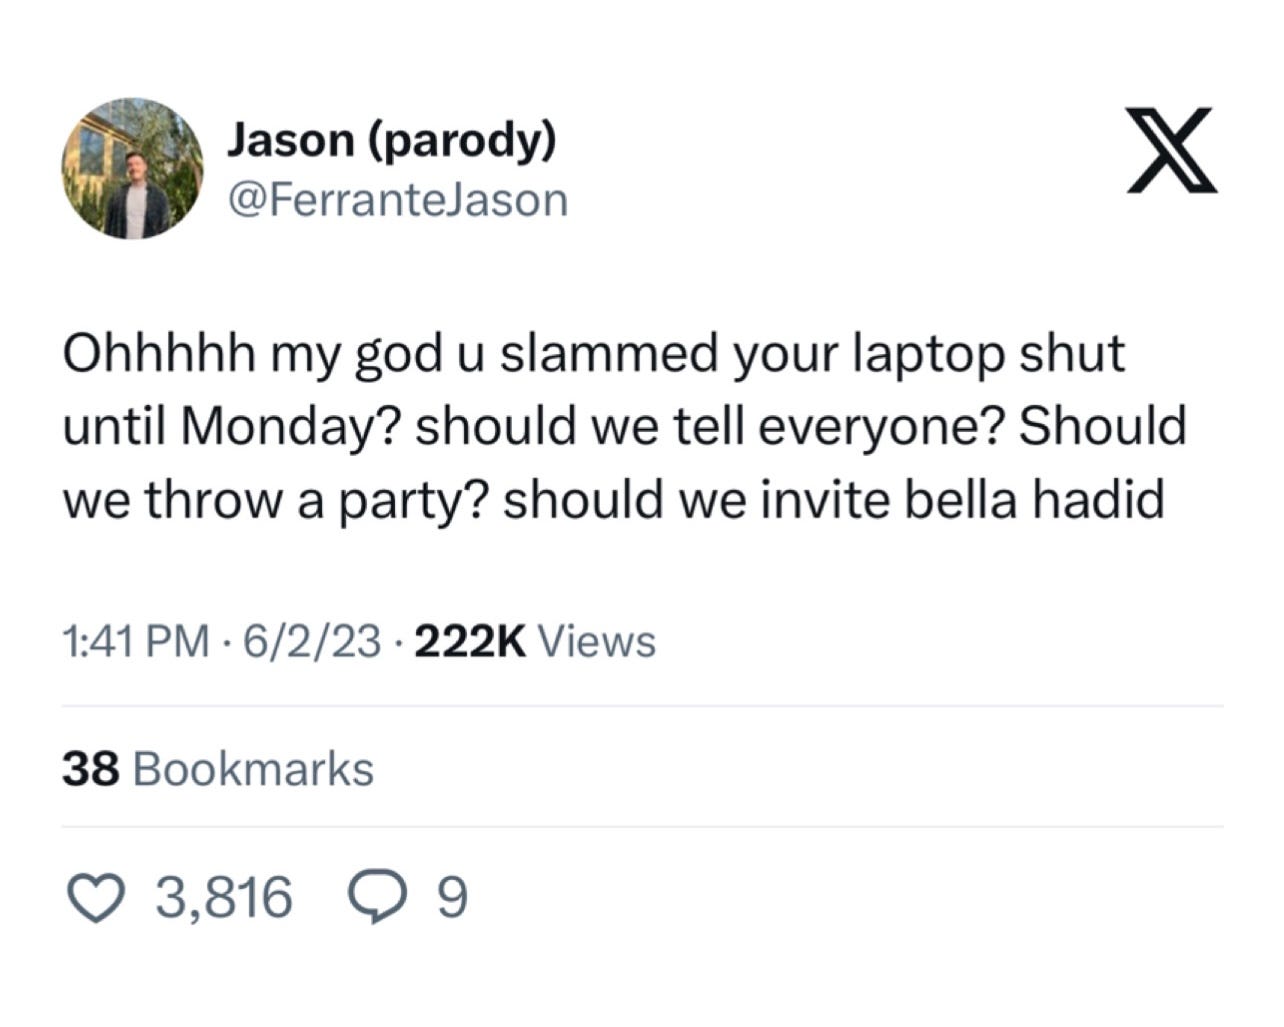 Jason (parody) (@FerranteJason): Ohhhhh my god u slammed your laptop shut until Monday? should we tell everyone? Should we throw a party? should we invite bella hadid